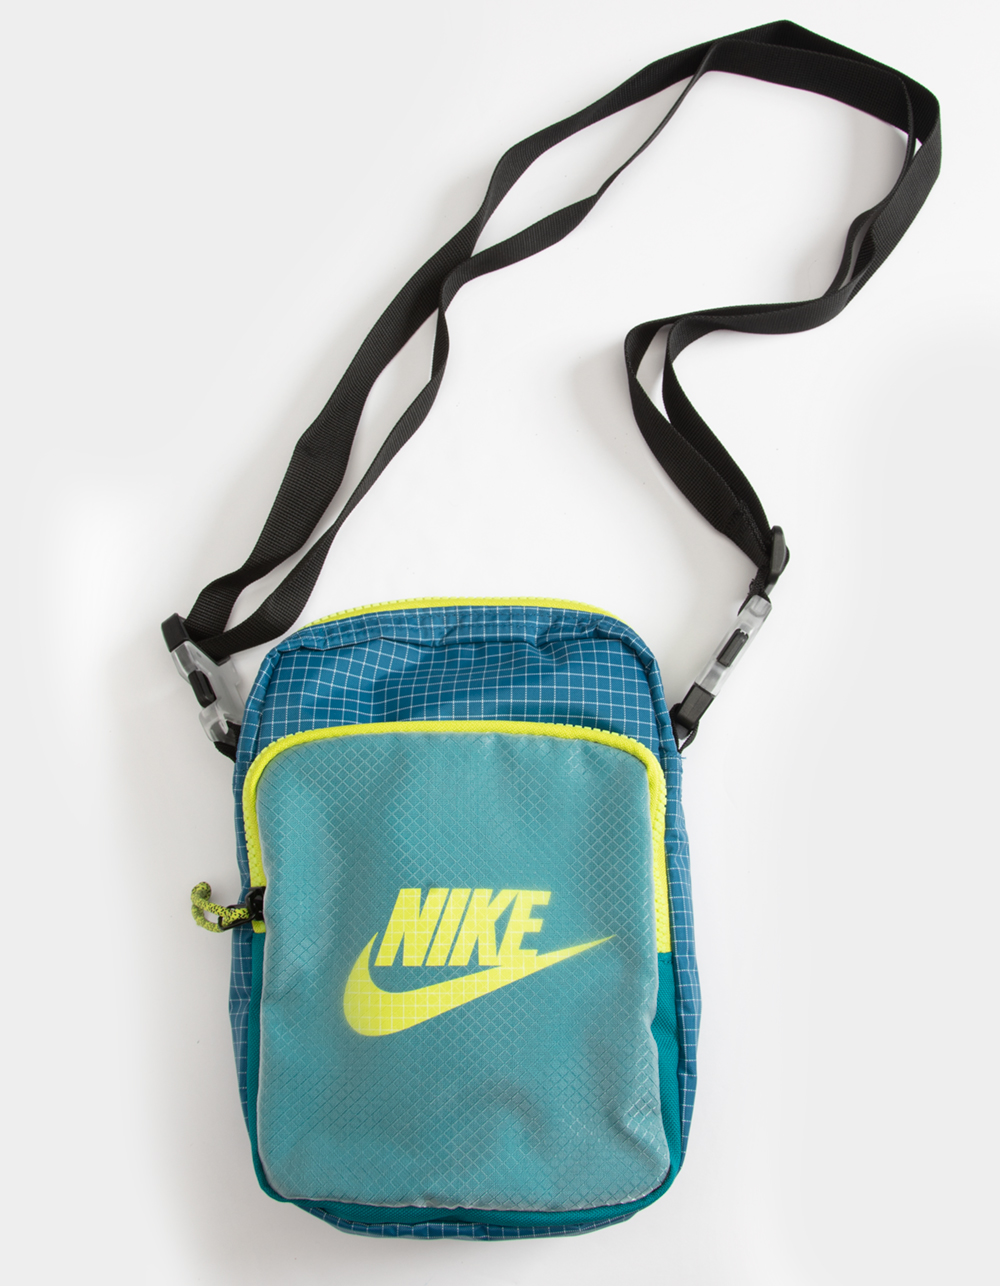 Nike Heritage cross body bag in blue